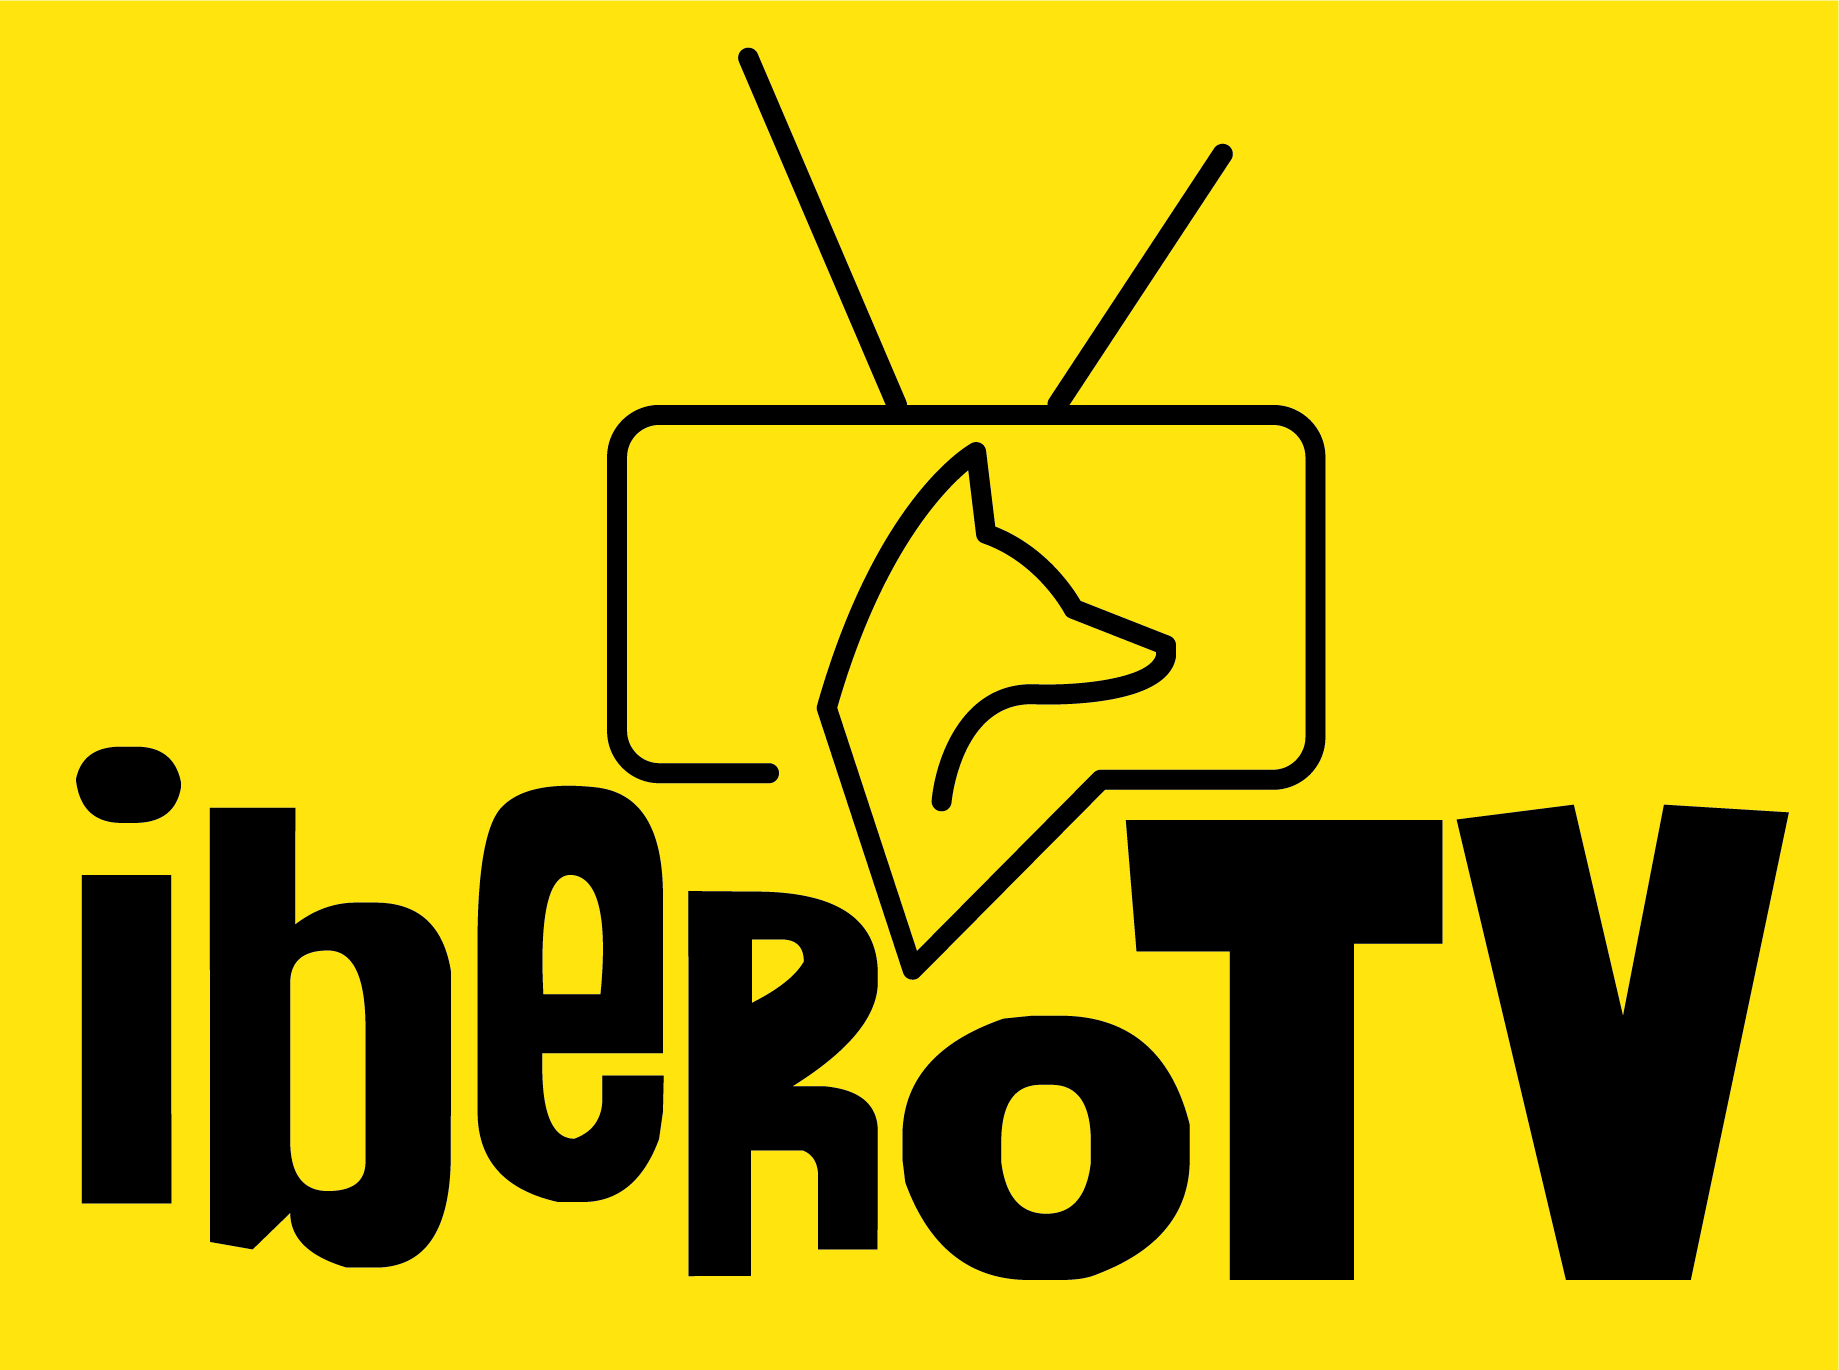 IBERO TV